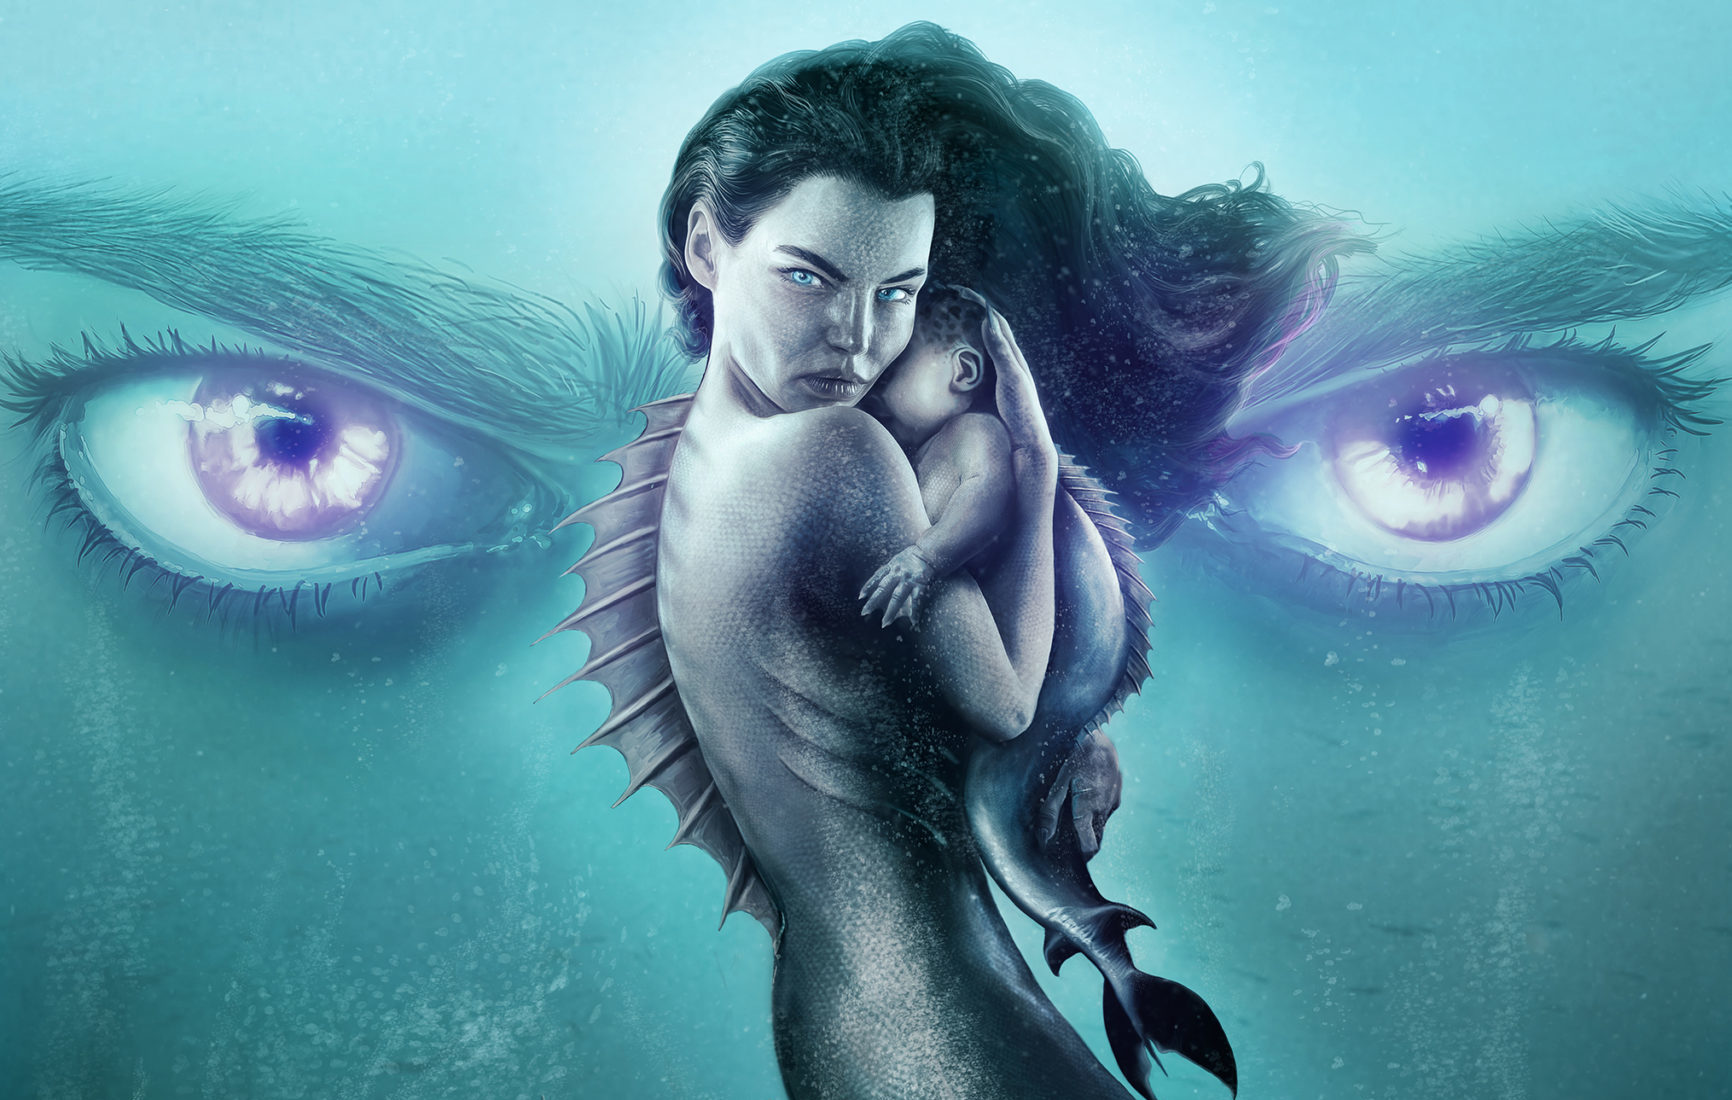 Siren' Renewed For Season 3 At Freeform